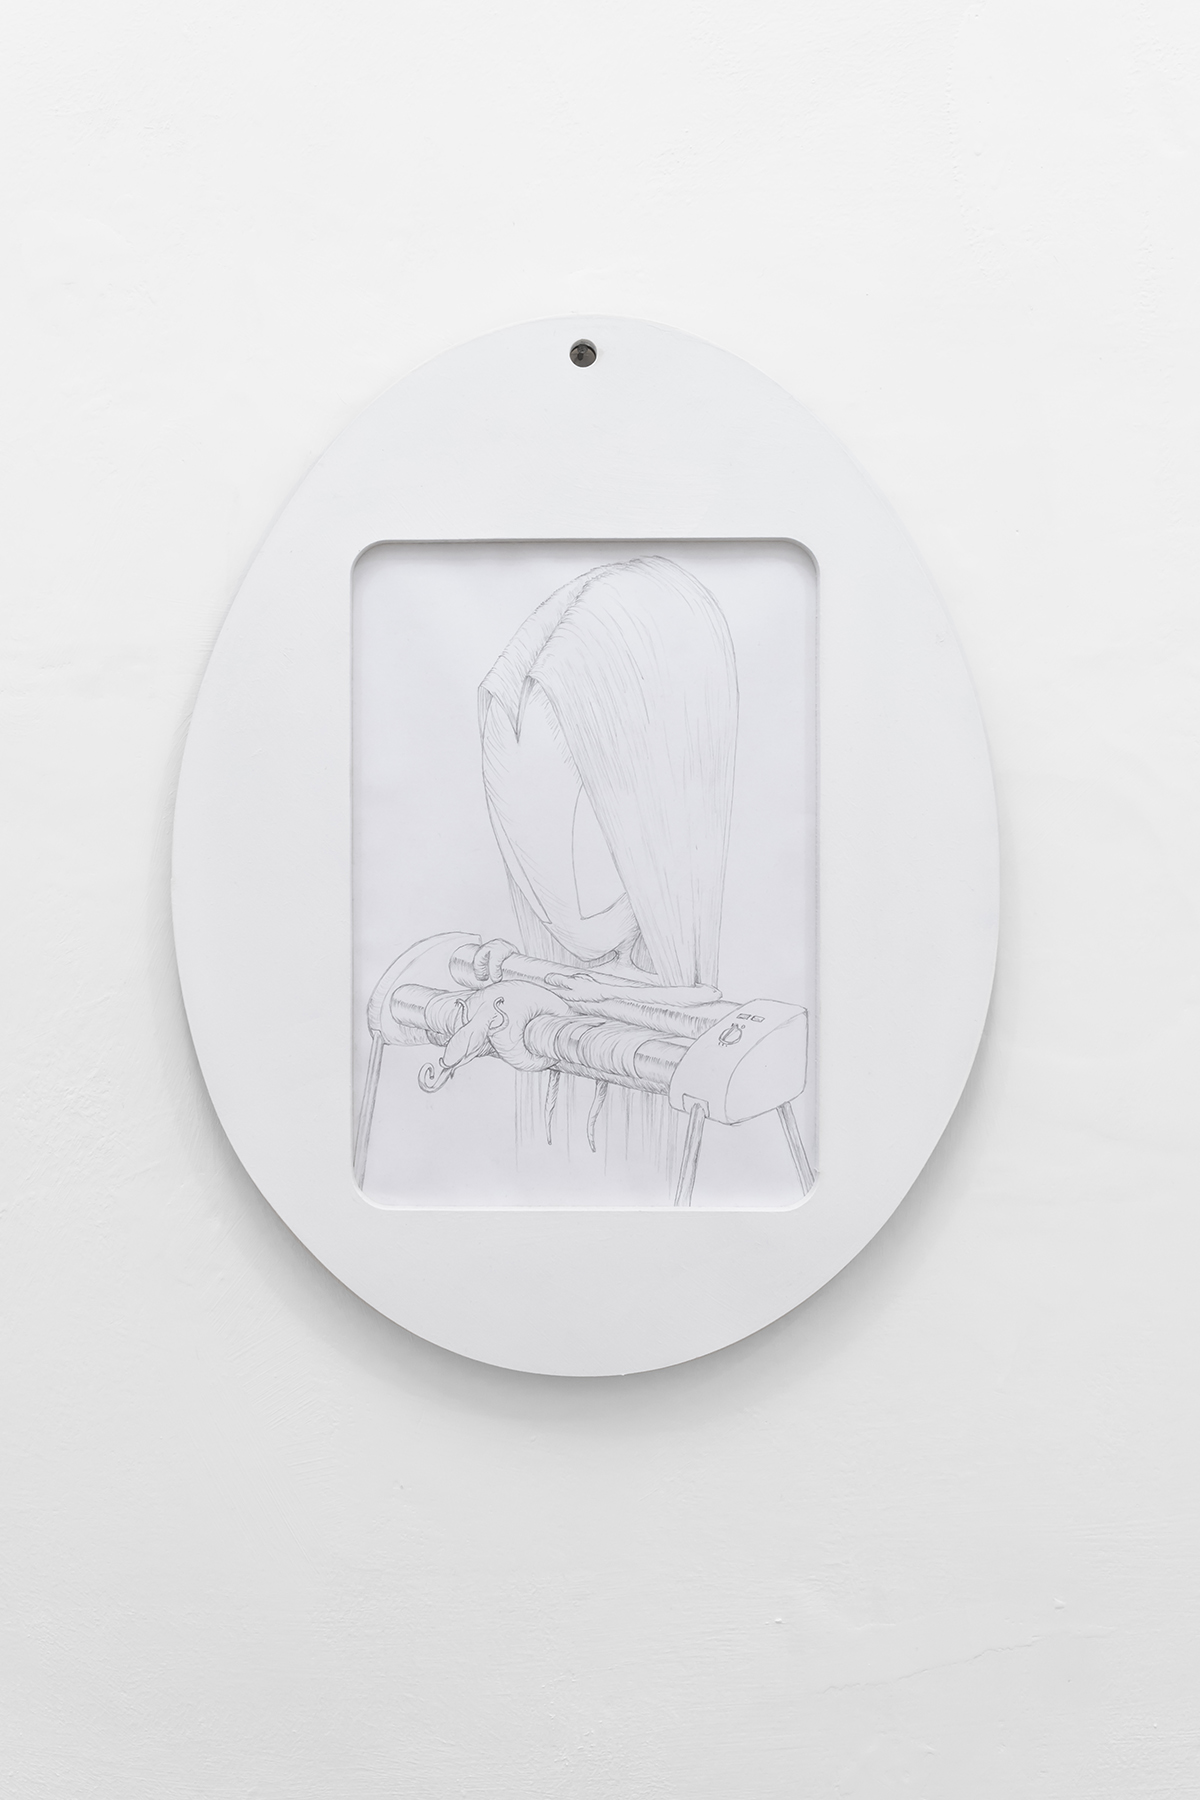 Thomas Hämén, Indolent approval, 2017, Graphite on paper, artist made frame. 39 x 30 cm.